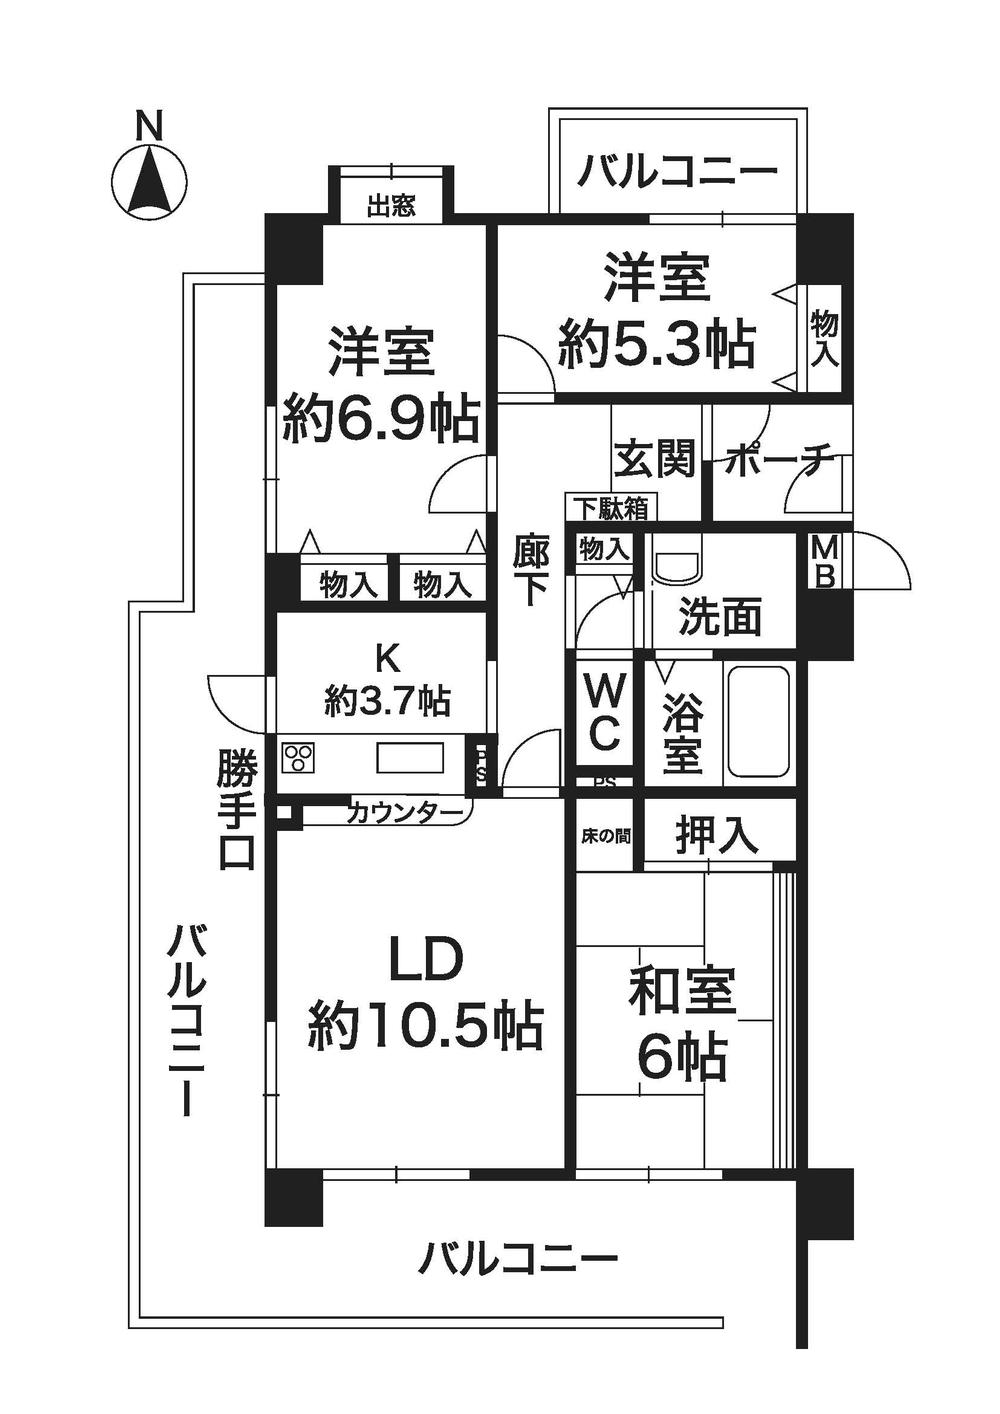 Floor plan. 3LDK, Price 23.8 million yen, Occupied area 77.68 sq m , Balcony area 36 sq m